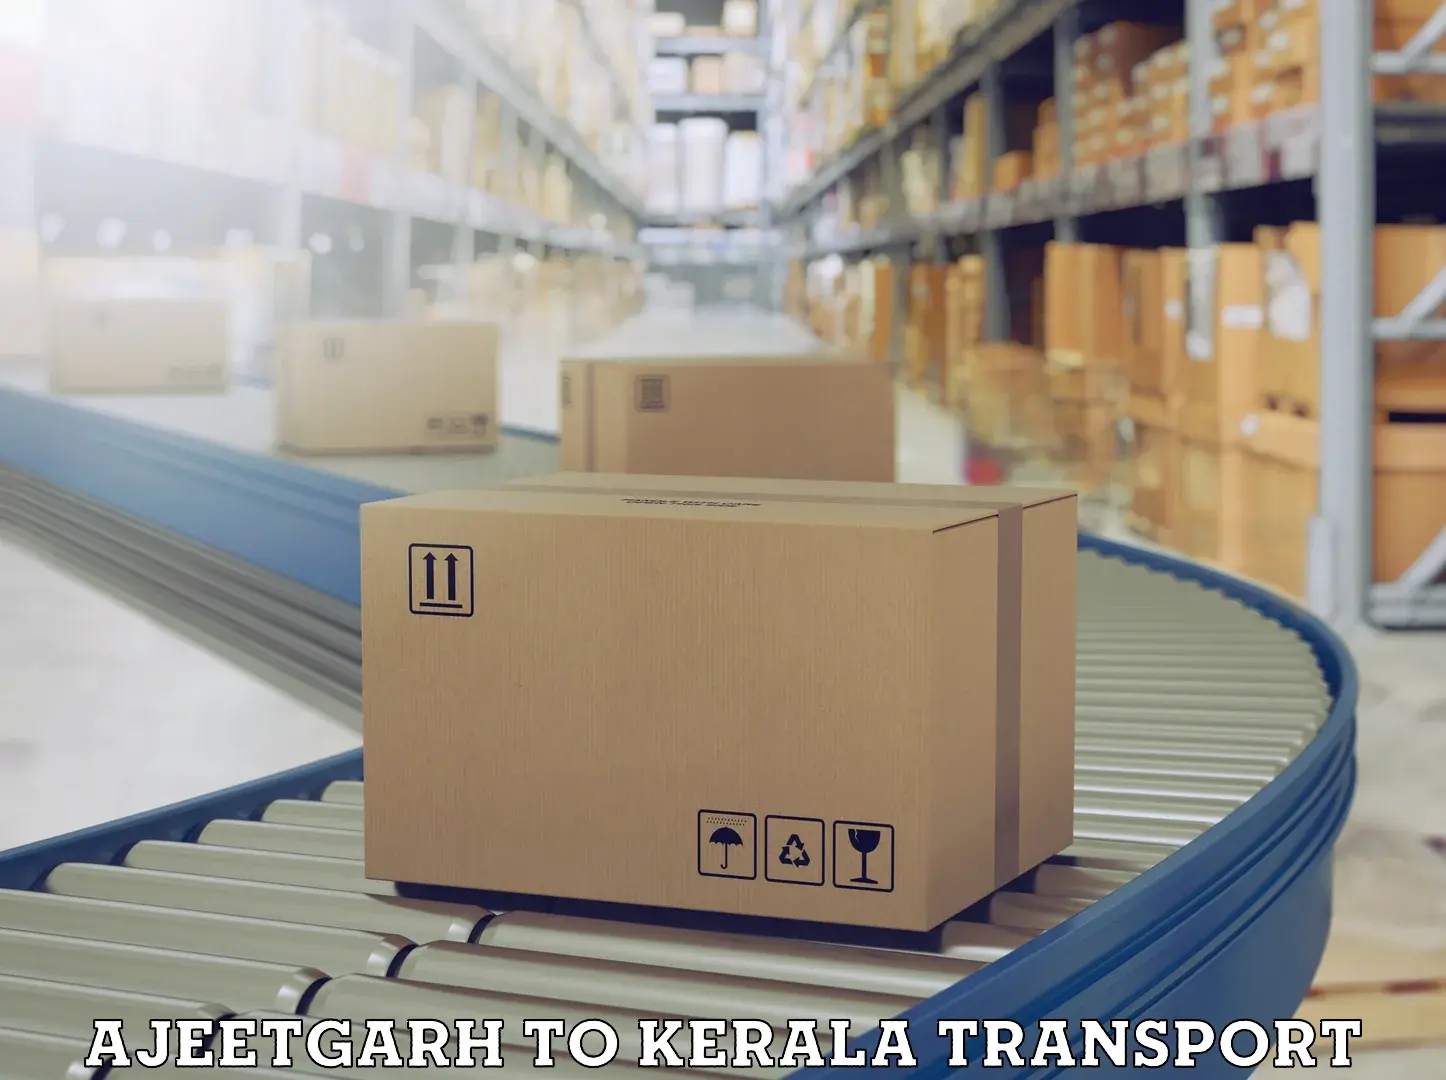 Nearby transport service Ajeetgarh to Kerala